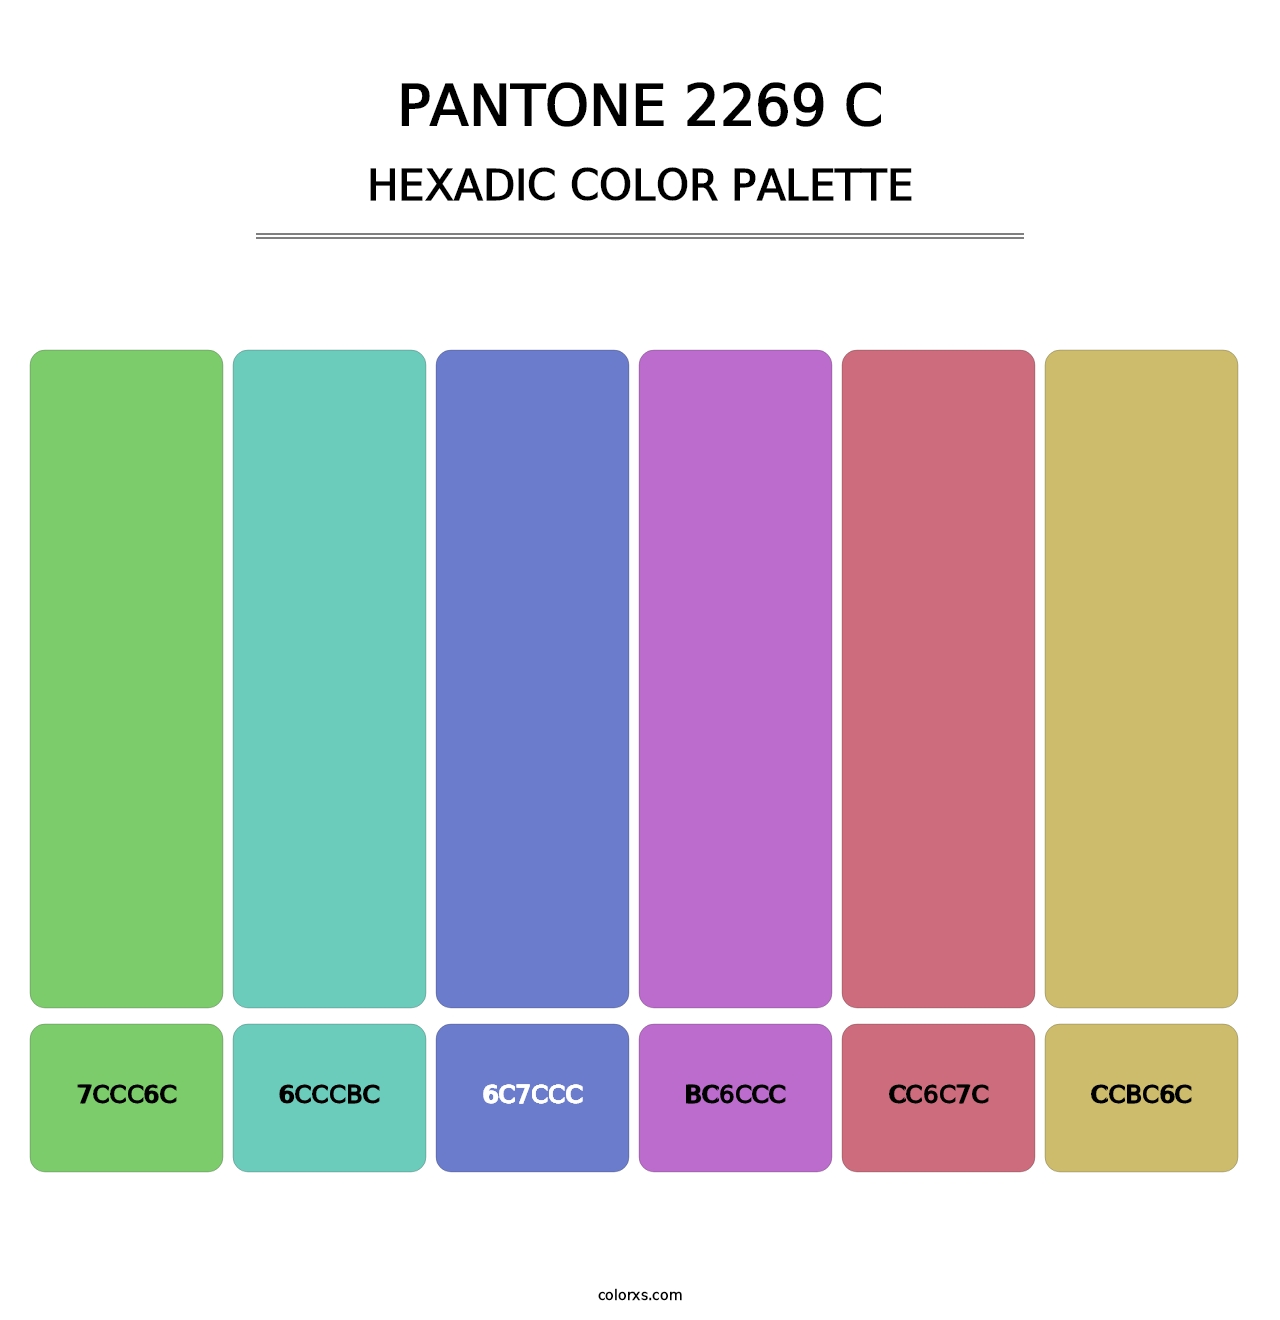 PANTONE 2269 C - Hexadic Color Palette